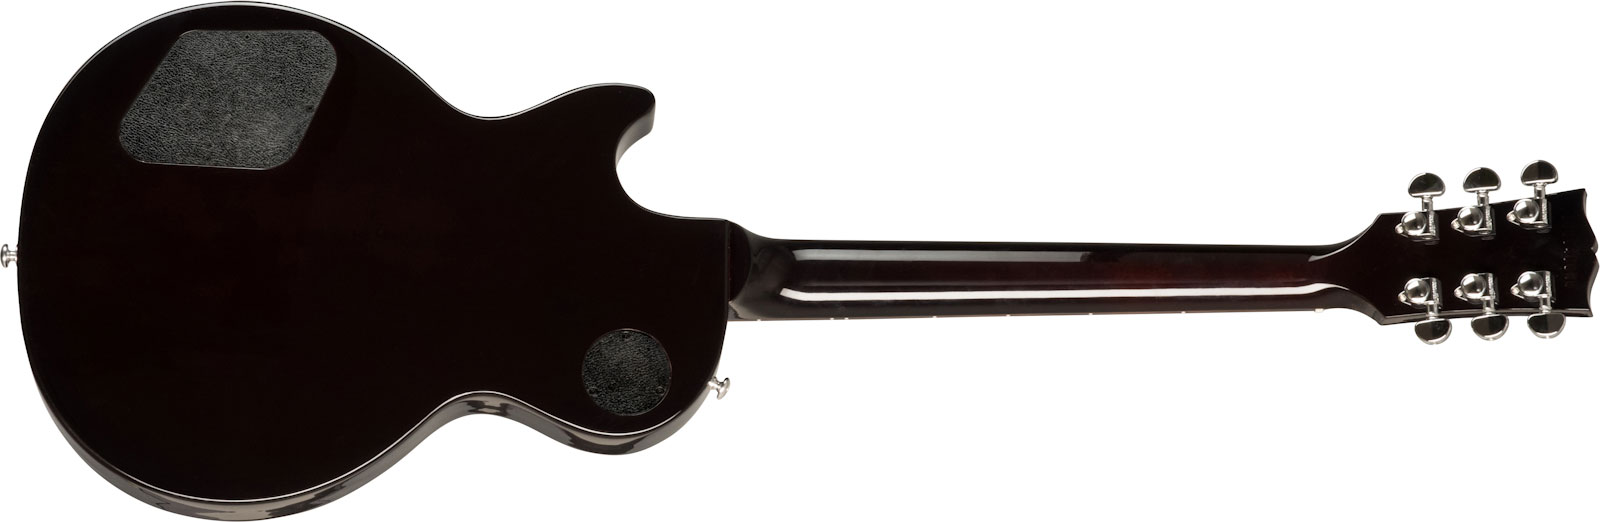 Gibson Les Paul Studio Modern 2h Ht Rw - Smokehouse Burst - Enkel gesneden elektrische gitaar - Variation 1